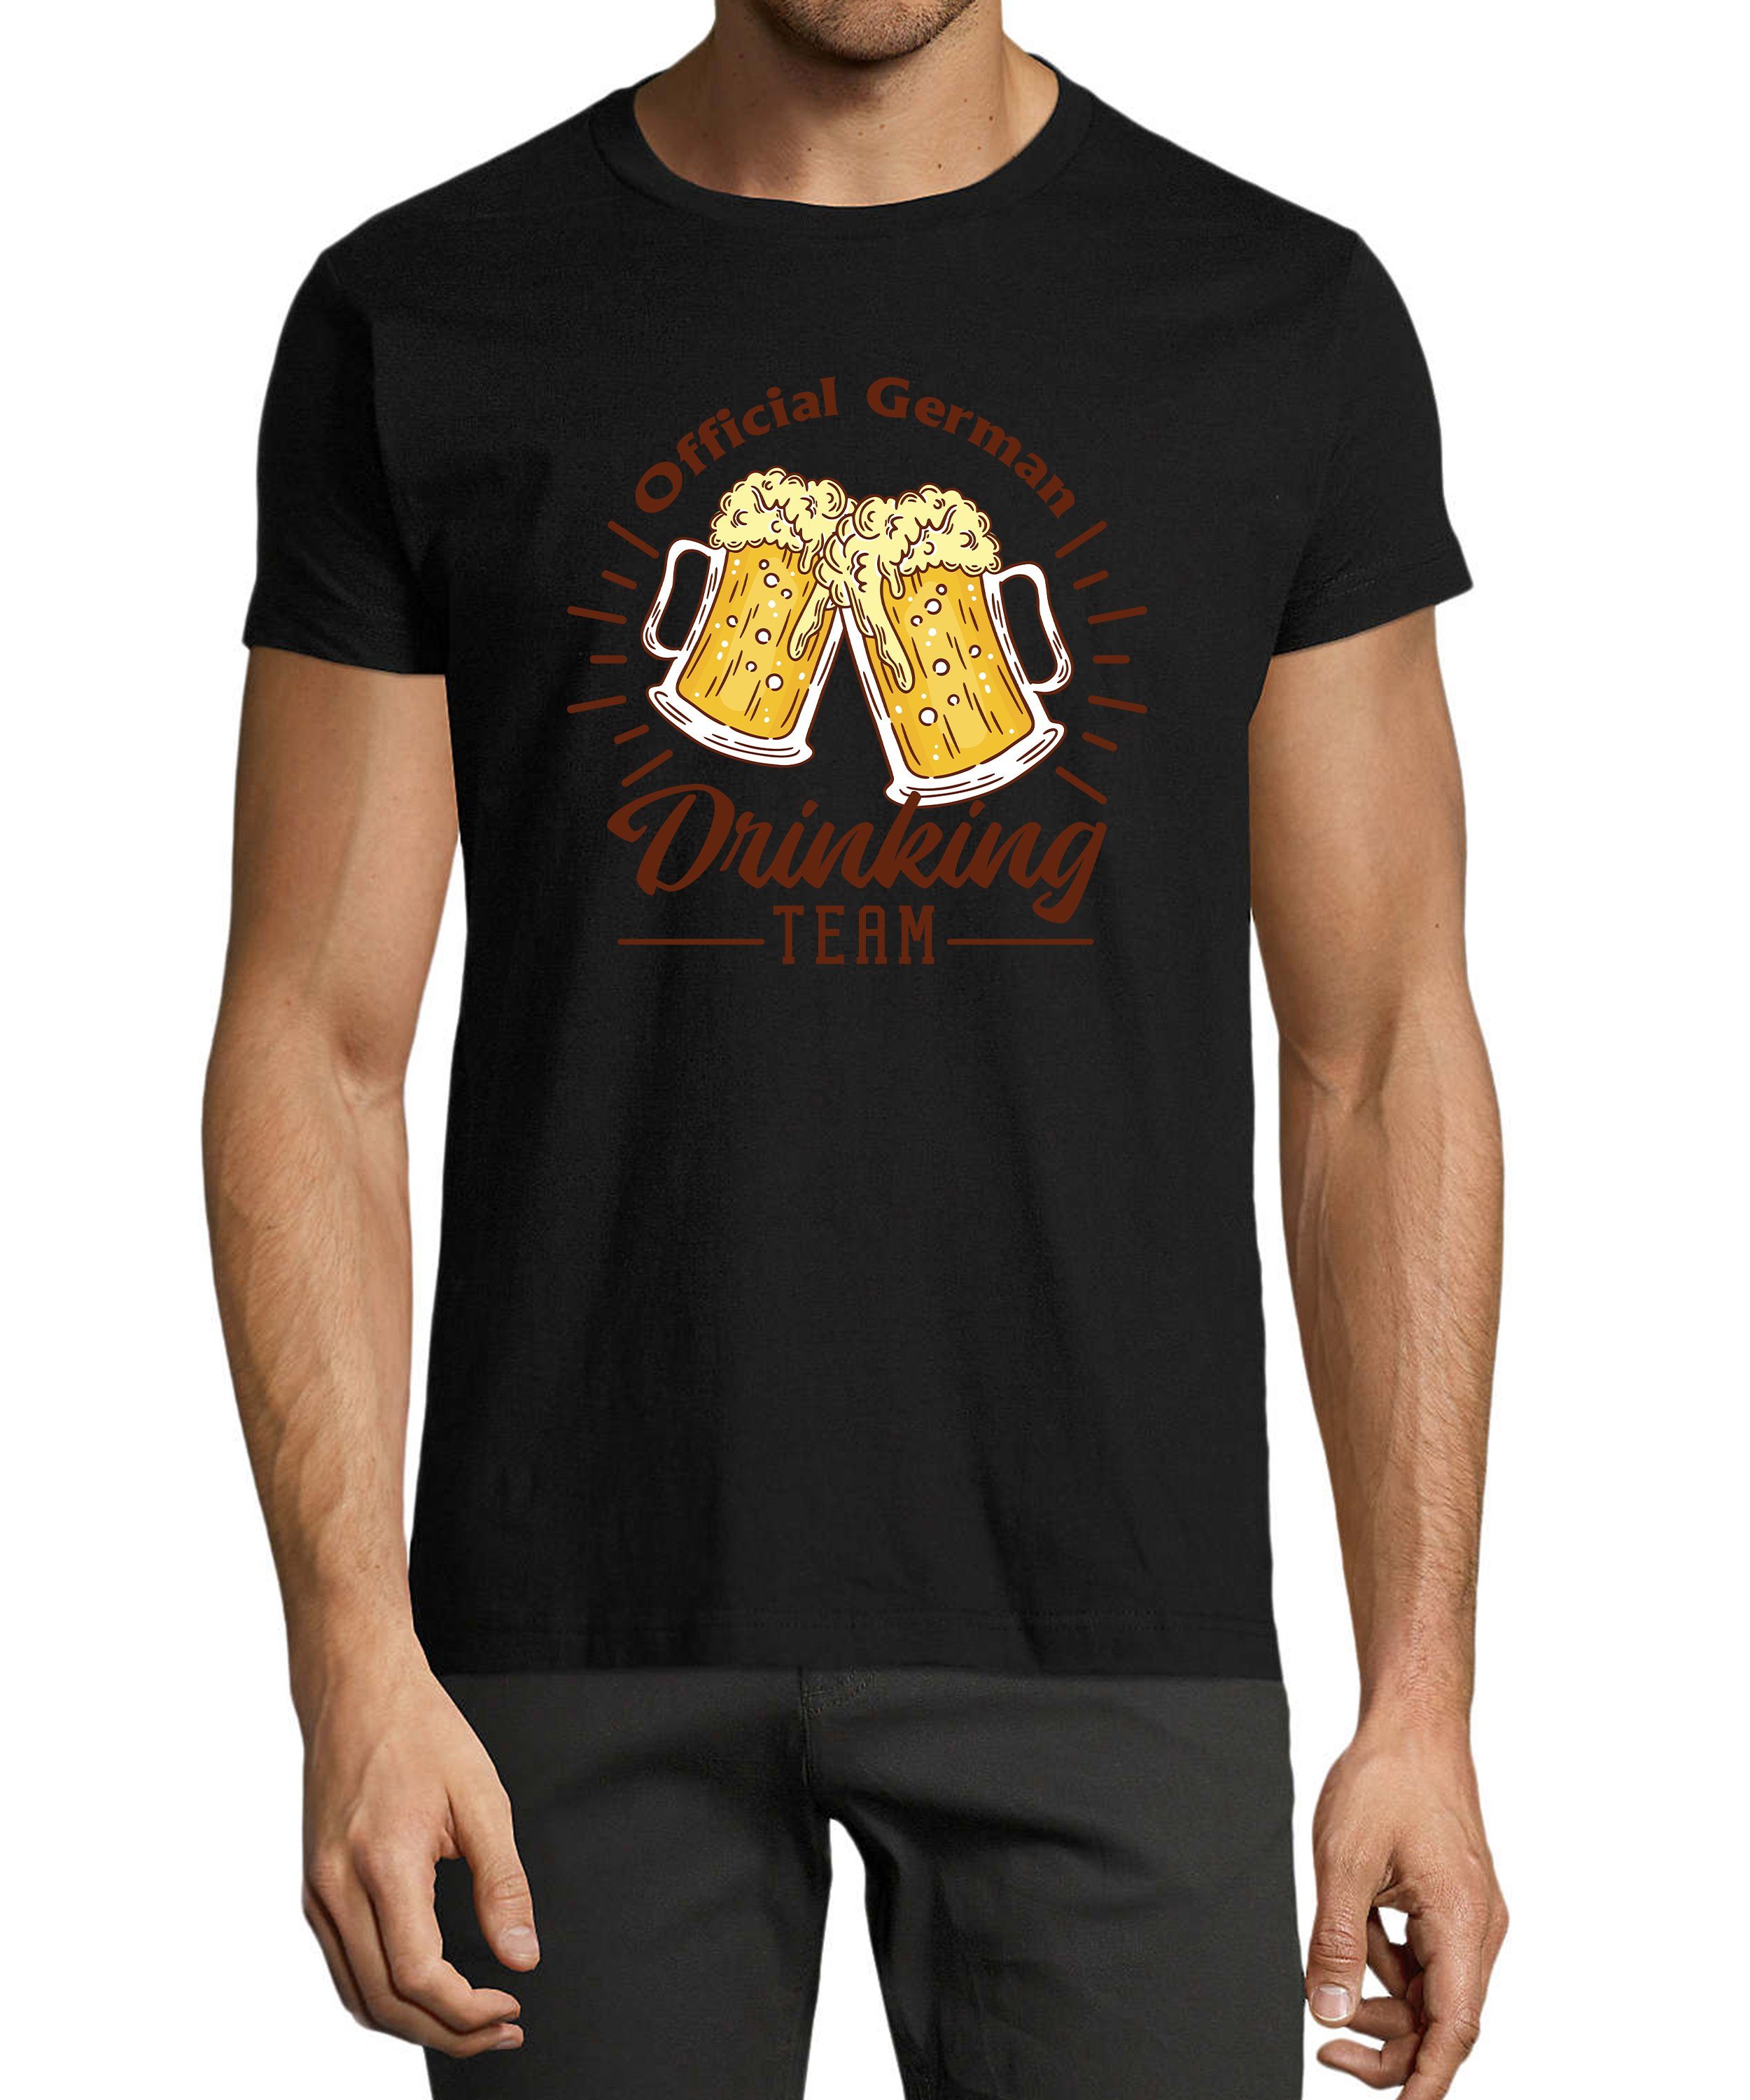 MyDesign24 T-Shirt Herren Fun Print Shirt - Oktoberfest official Drinking Team Baumwollshirt mit Aufdruck Regular Fit, i304 schwarz | T-Shirts